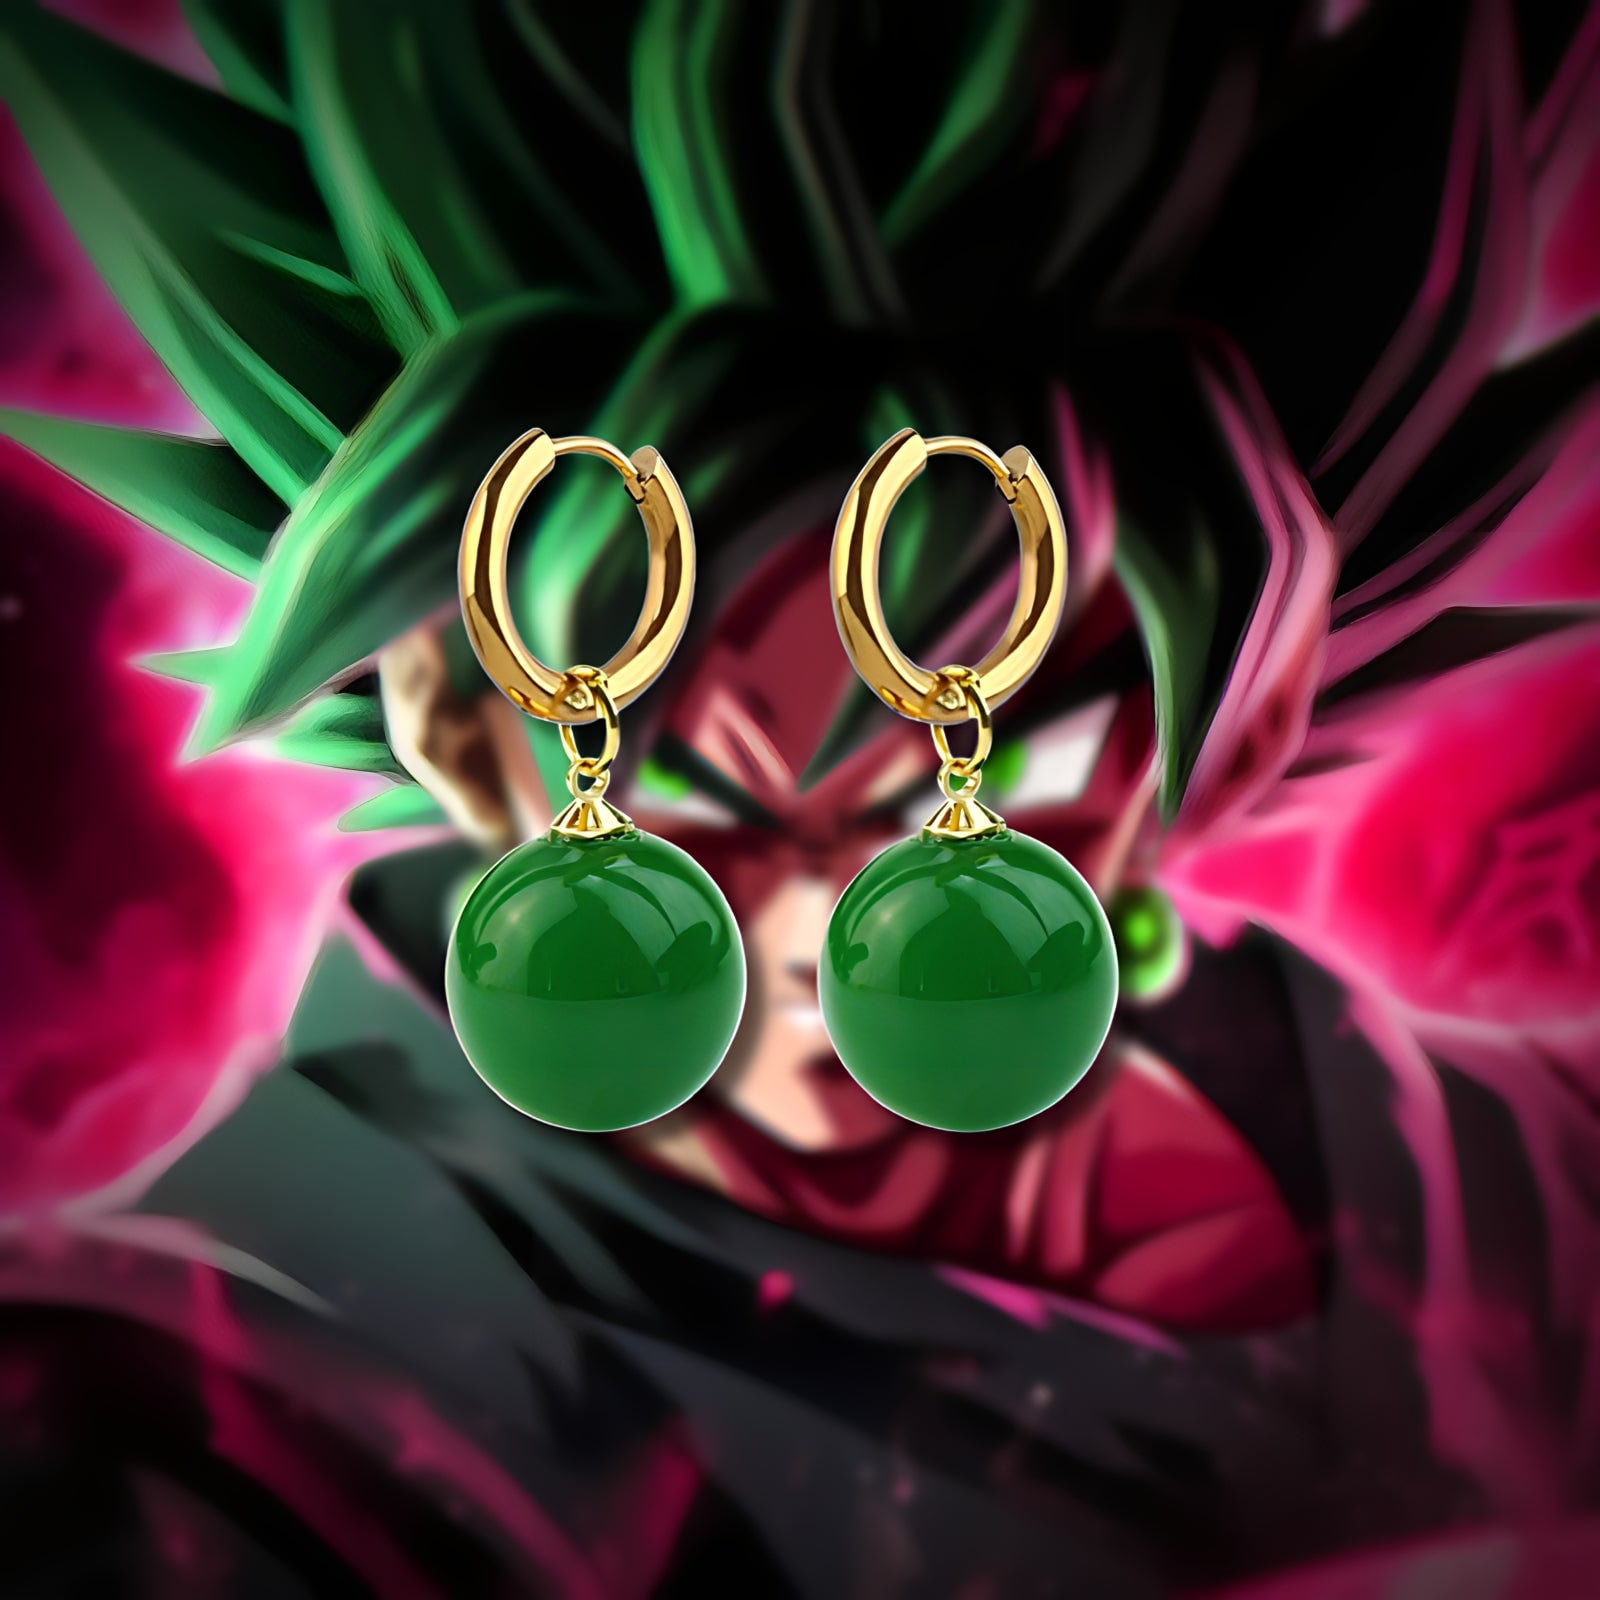 Dragon Ball Z - Jewelry Potara Earrings Pair